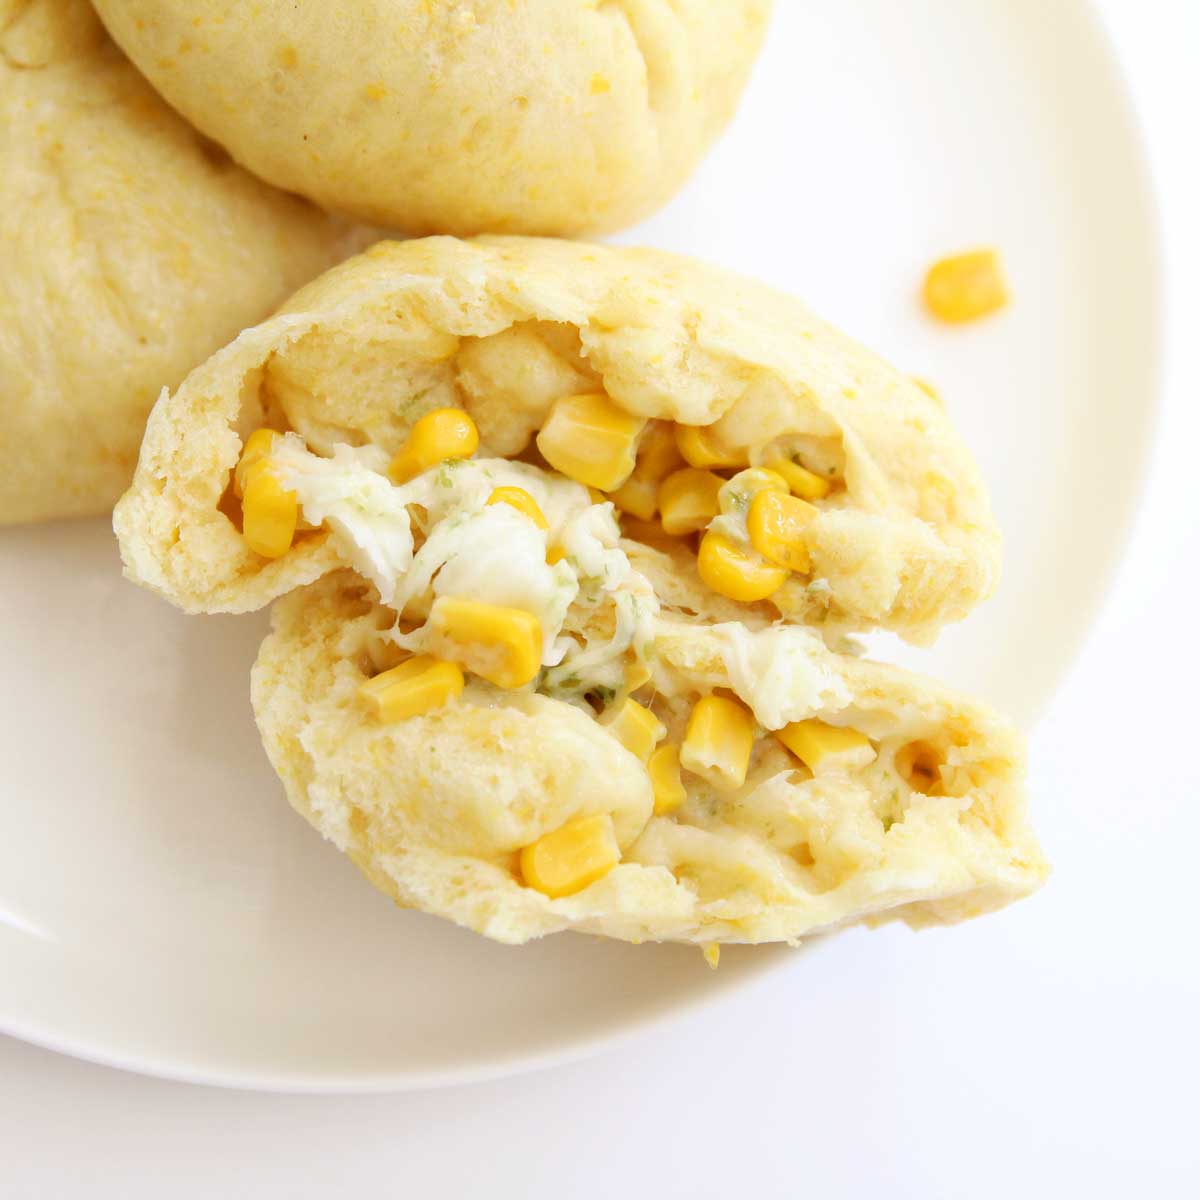 Savory "Cornbread" Steamed Buns with a Korean Cheese Corn Filling - Pistachio Nice Cream